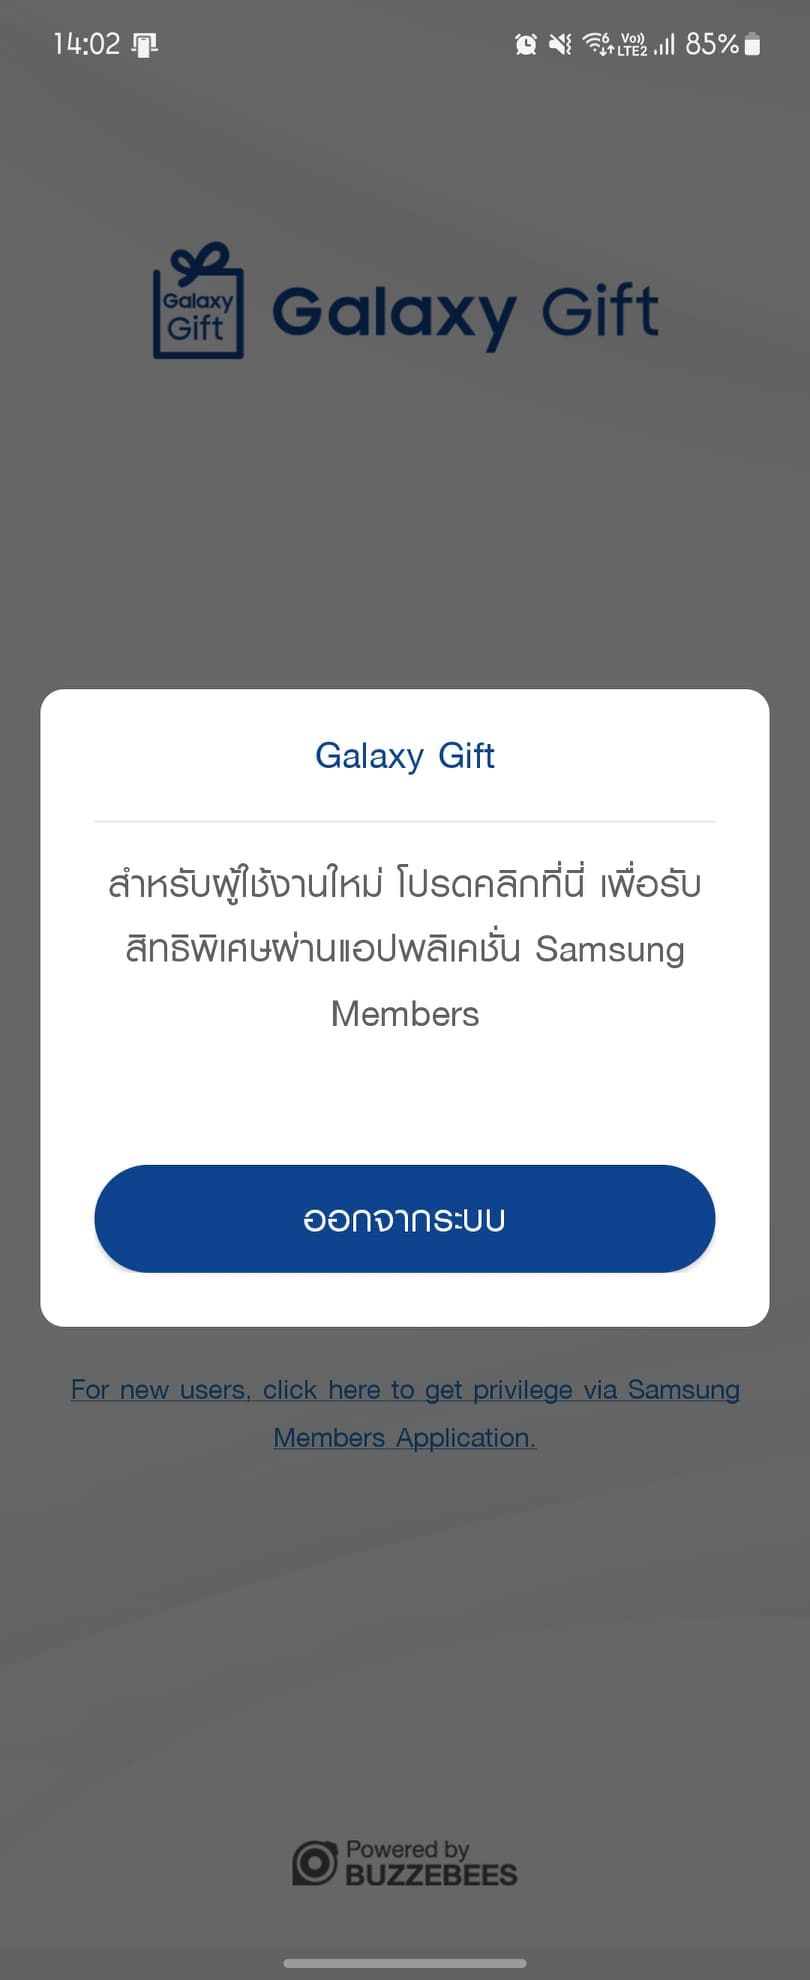 Samsung Galaxy Gift ย้ายบ้านมาอยู่ในแอป Samsung Members แต่สิทธิพิเศษยังจัดเต็มเหมือนเดิม